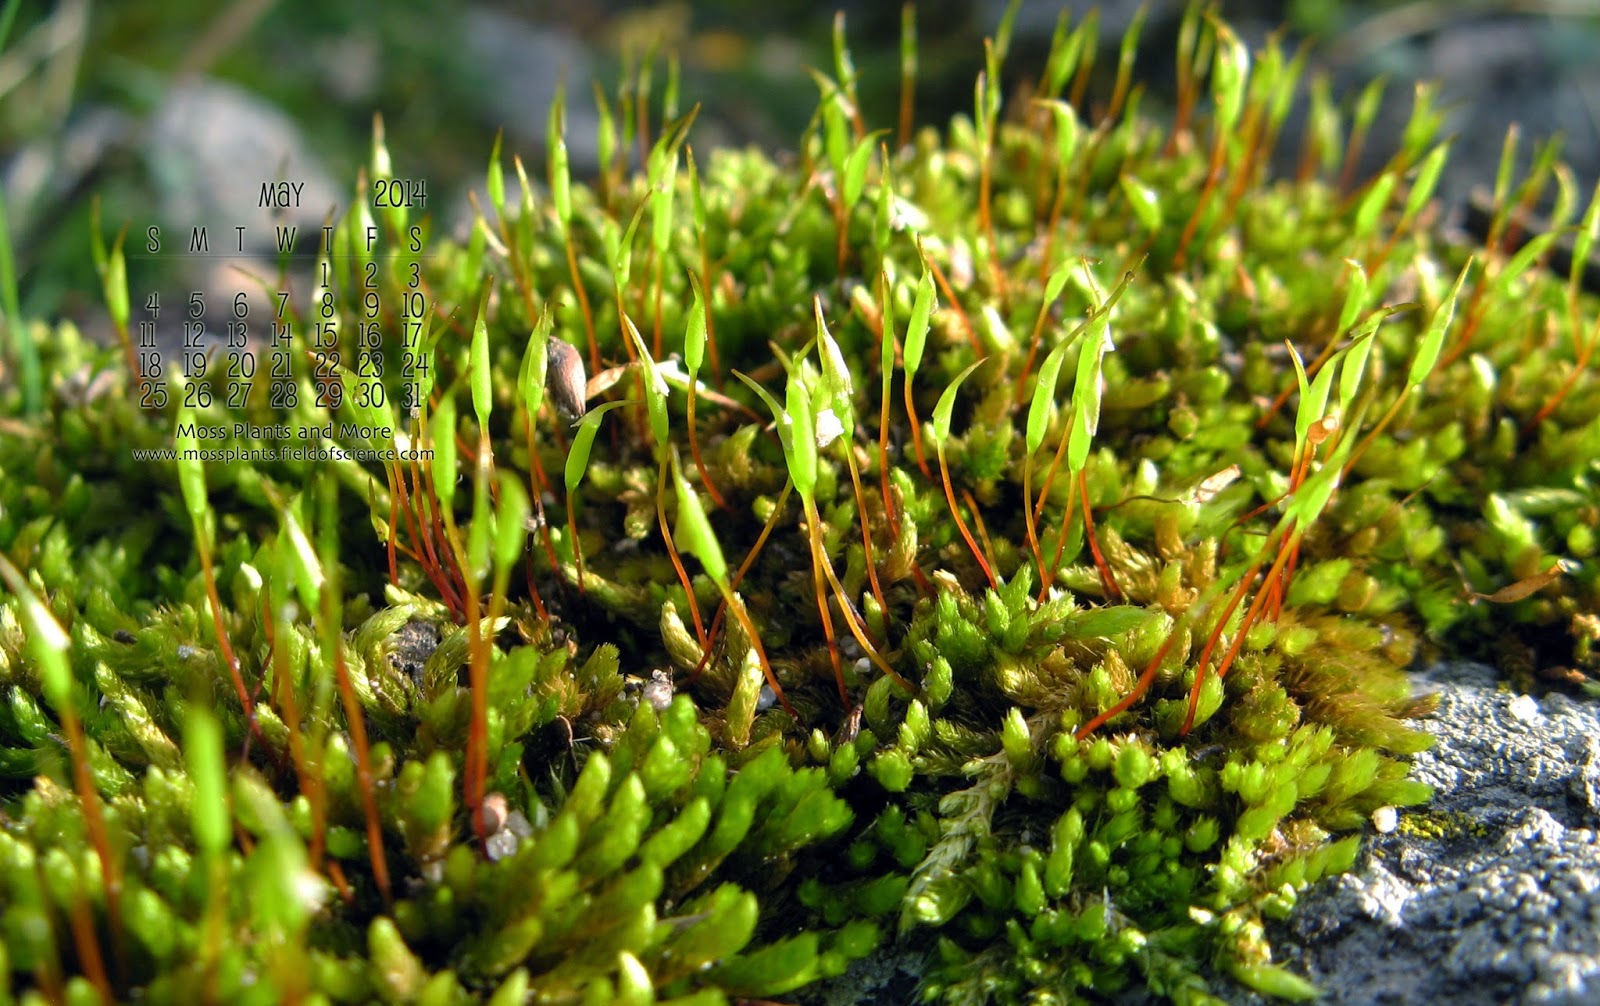 Moss Plants And More May 2014 Desktop Calendar